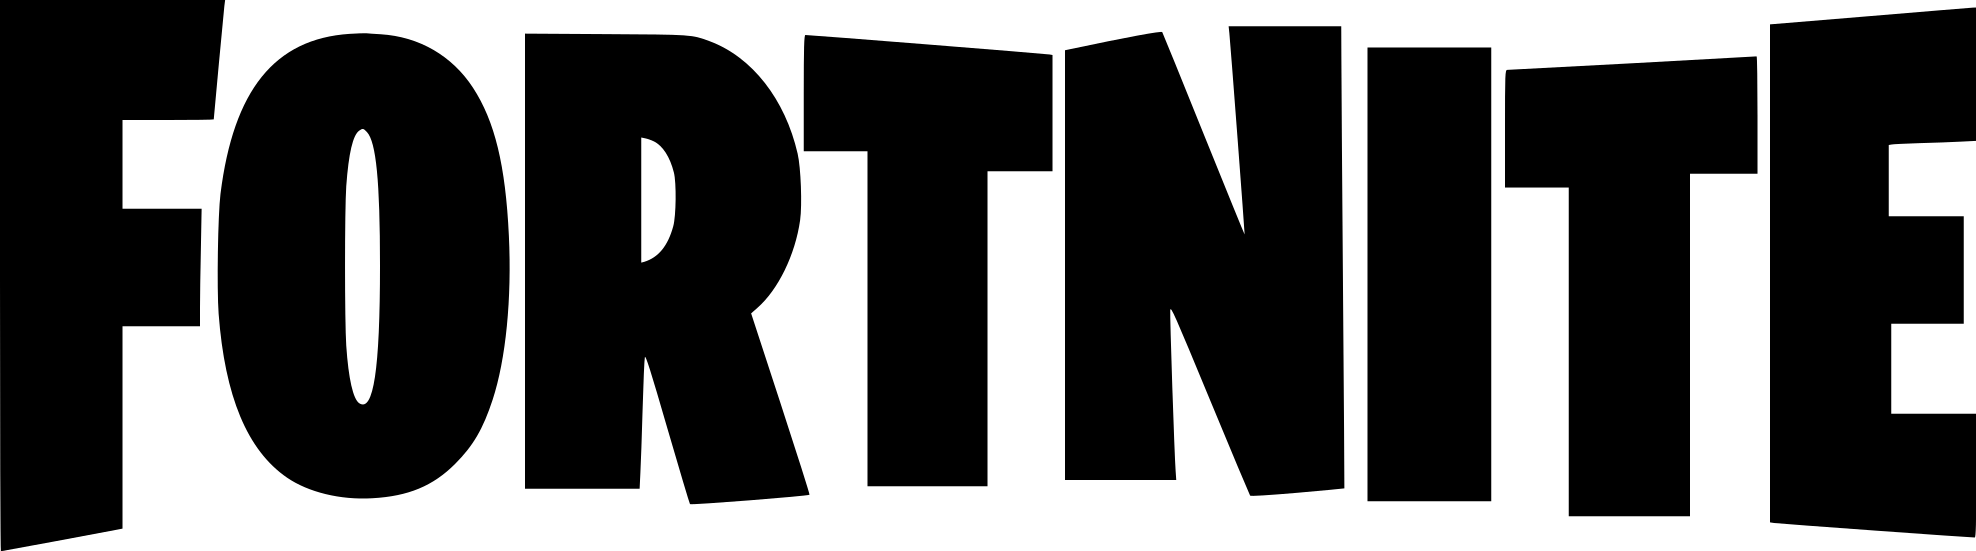 Fortnite Logo Png Black Clipart Images Black and White